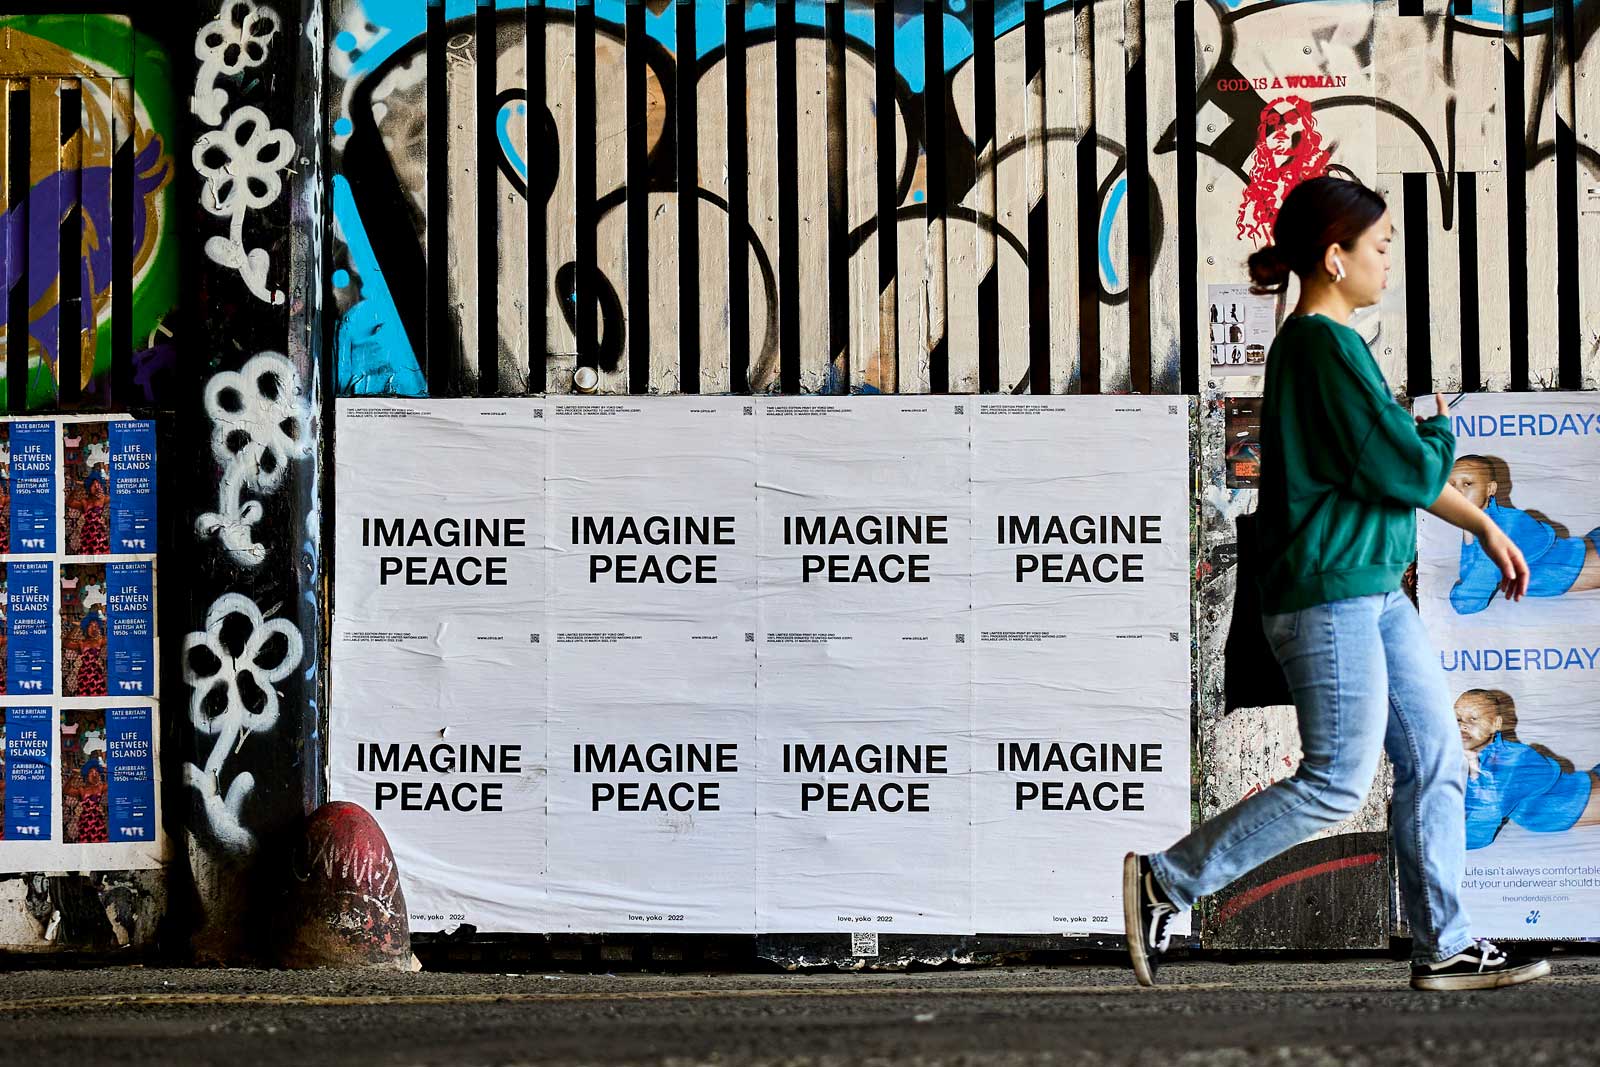 Yoko Ono wants you to IMAGINE PEACE